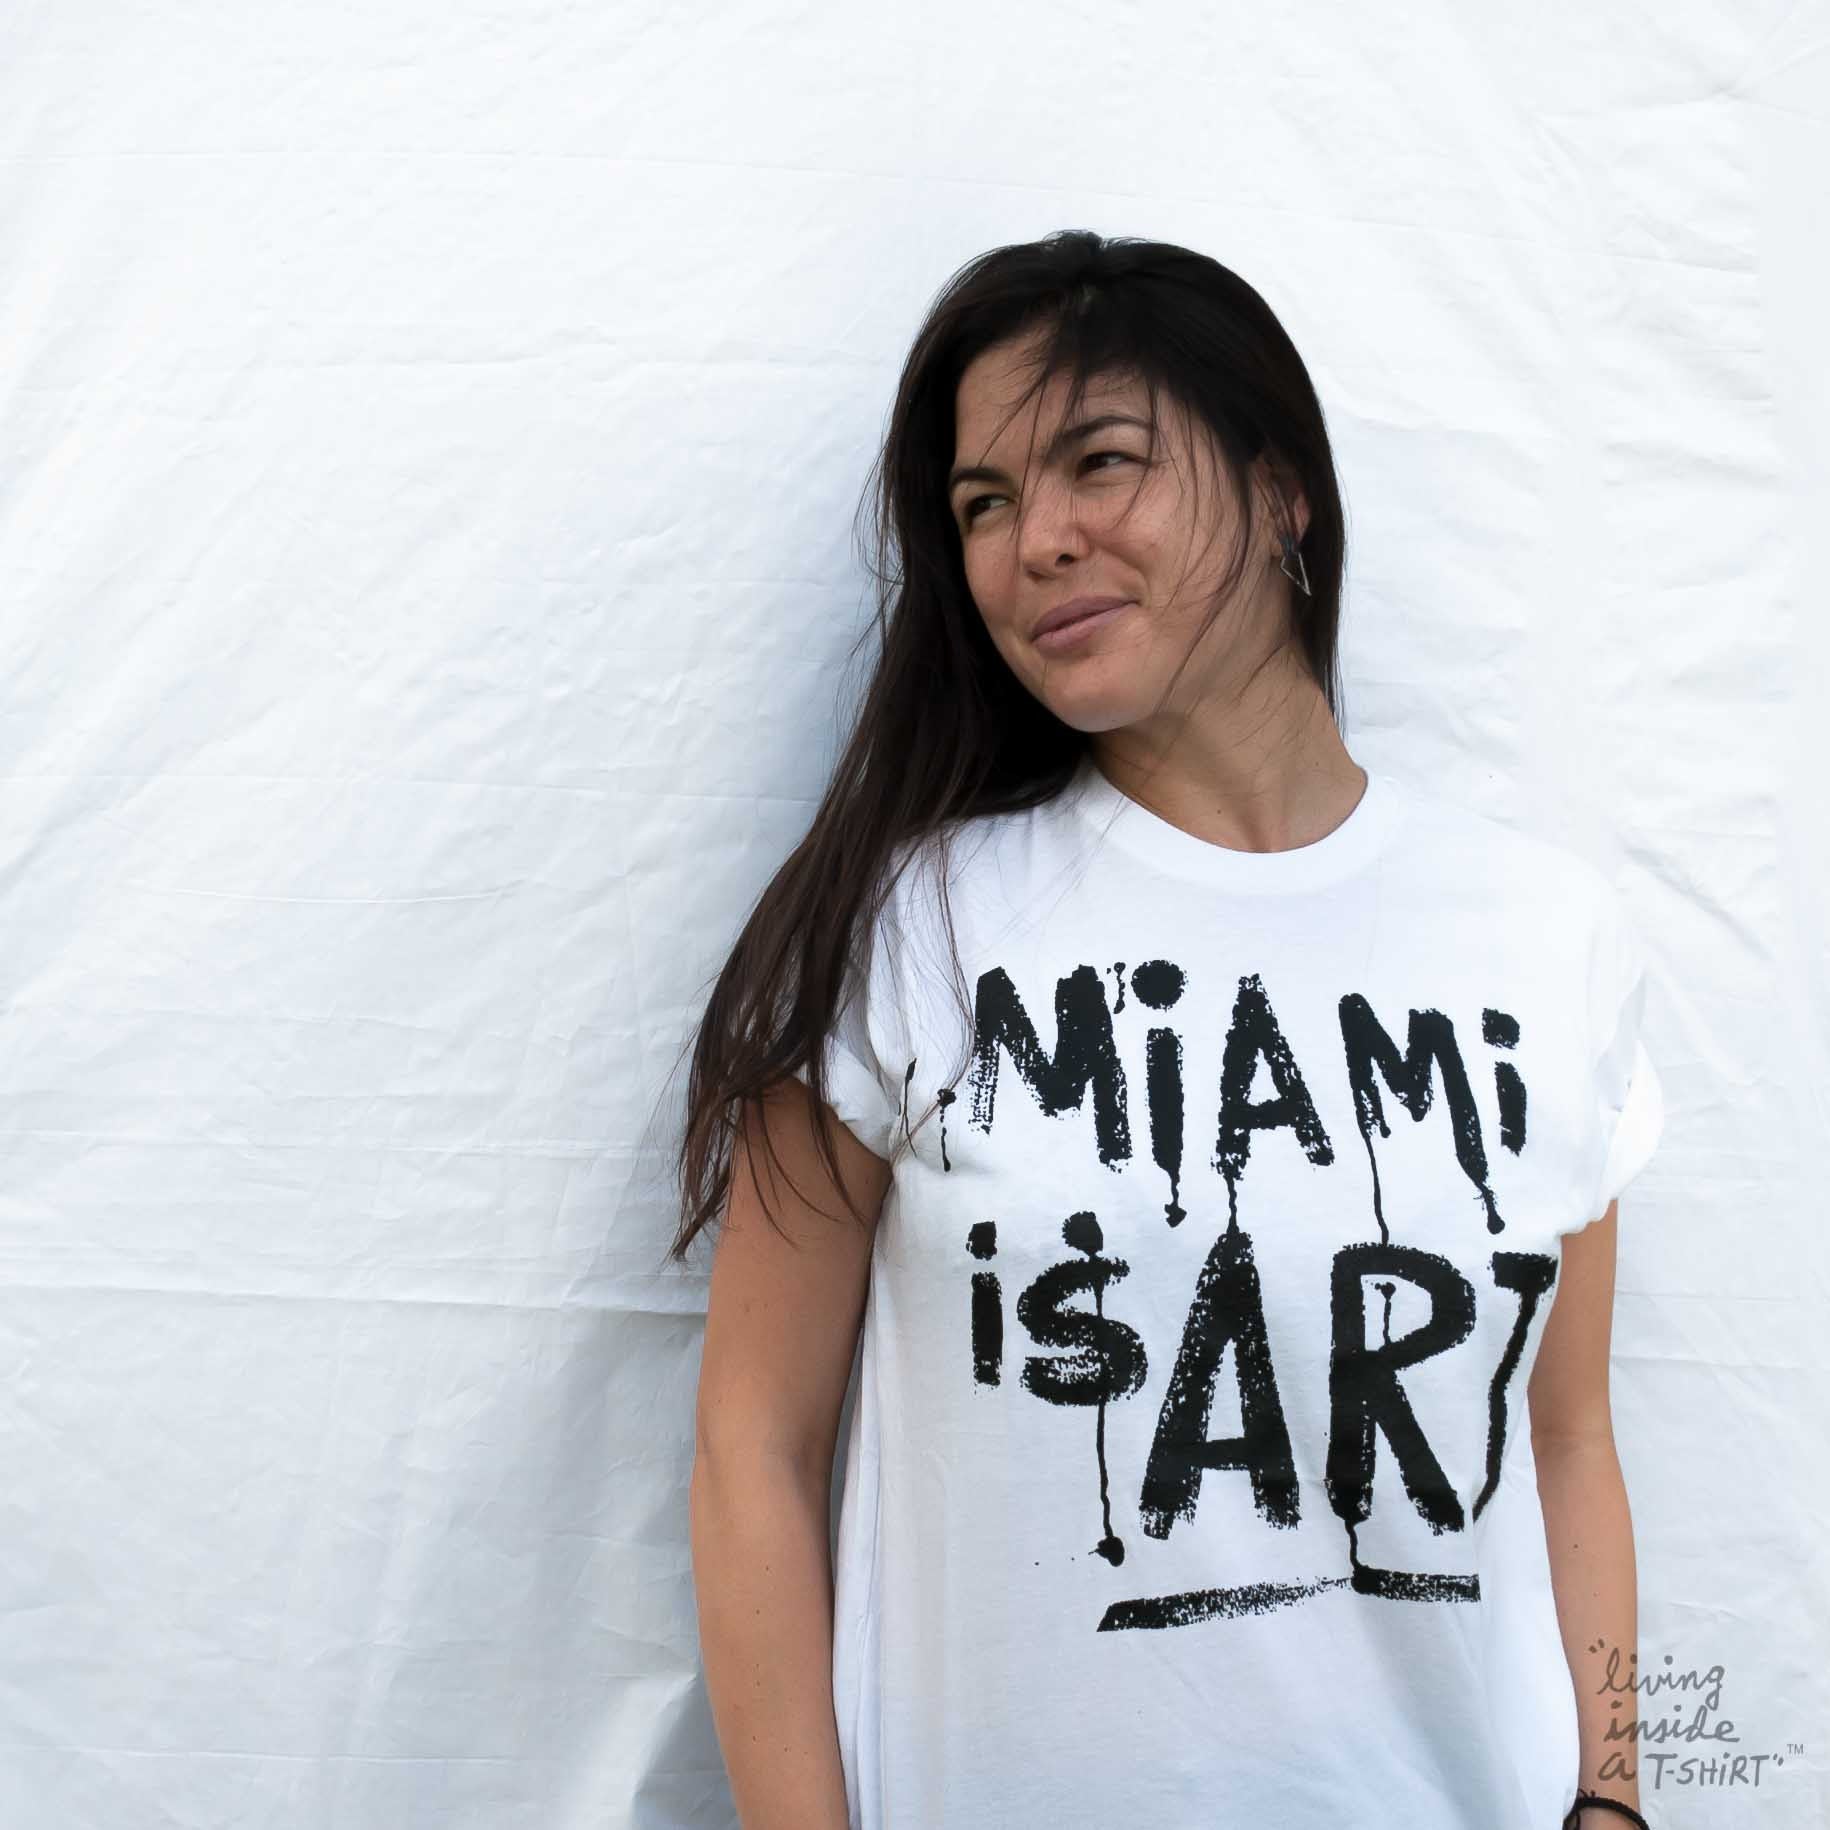 Miami is Art - Unisex T-shirt